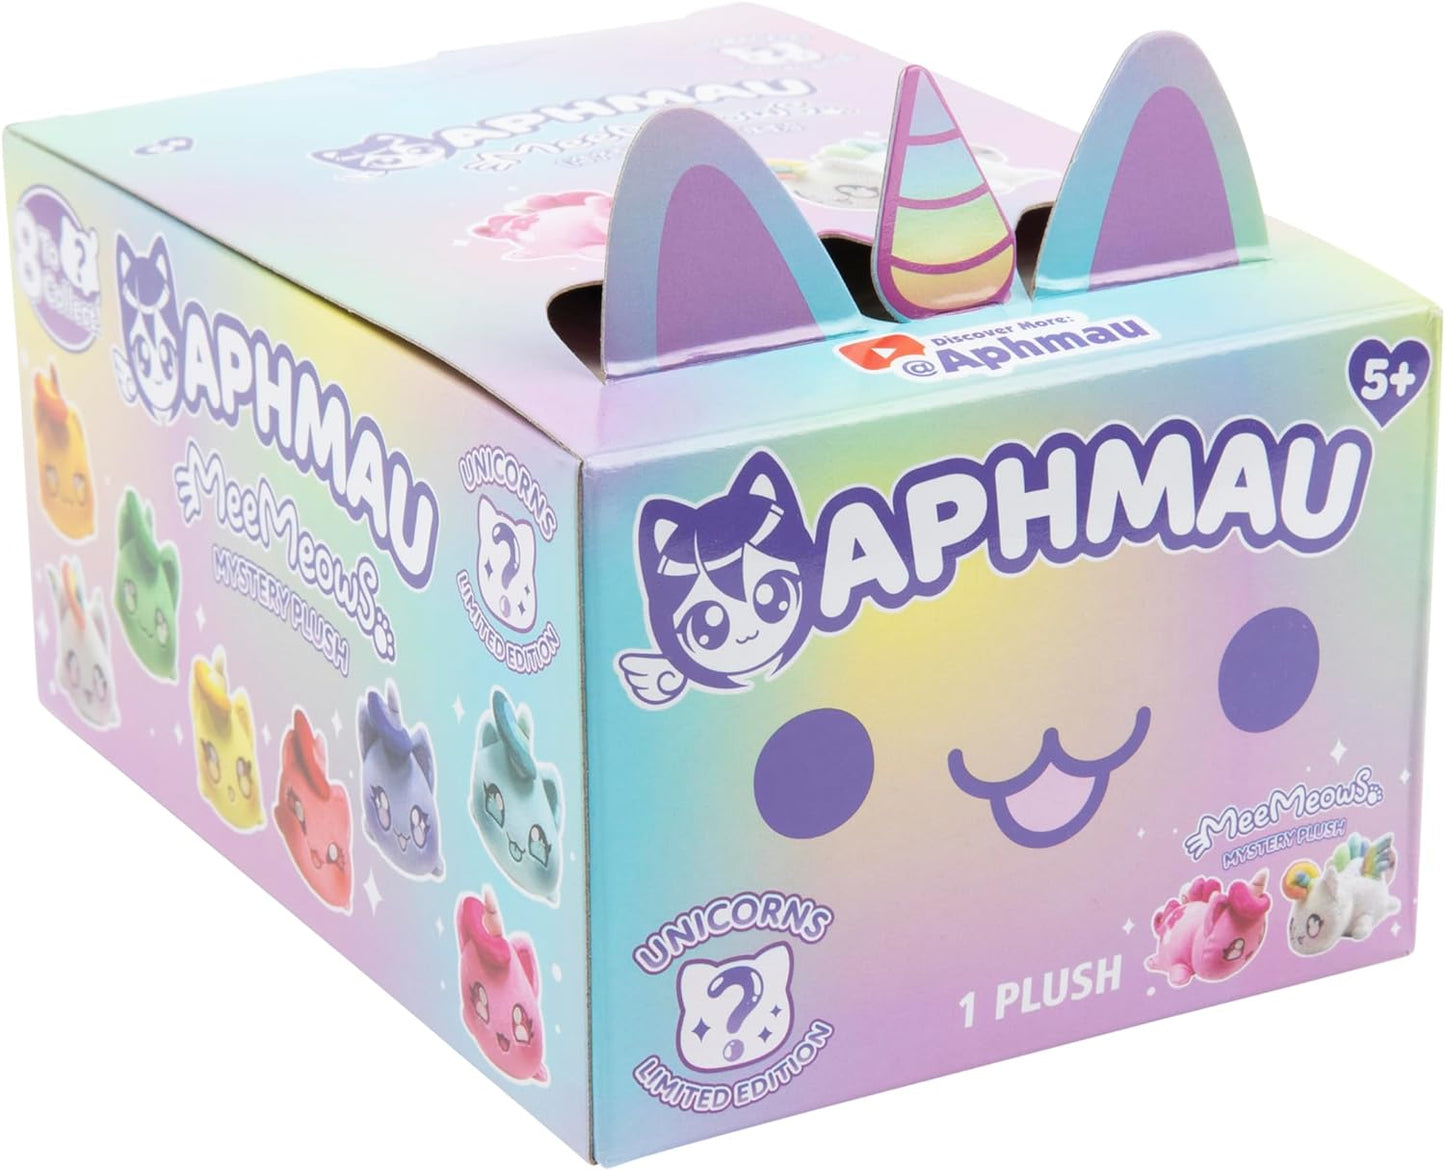 ORANGE UNICORN CAT - MeeMeows Limited Edition Aphmau Plush (NEW) RARE Kitty Toy